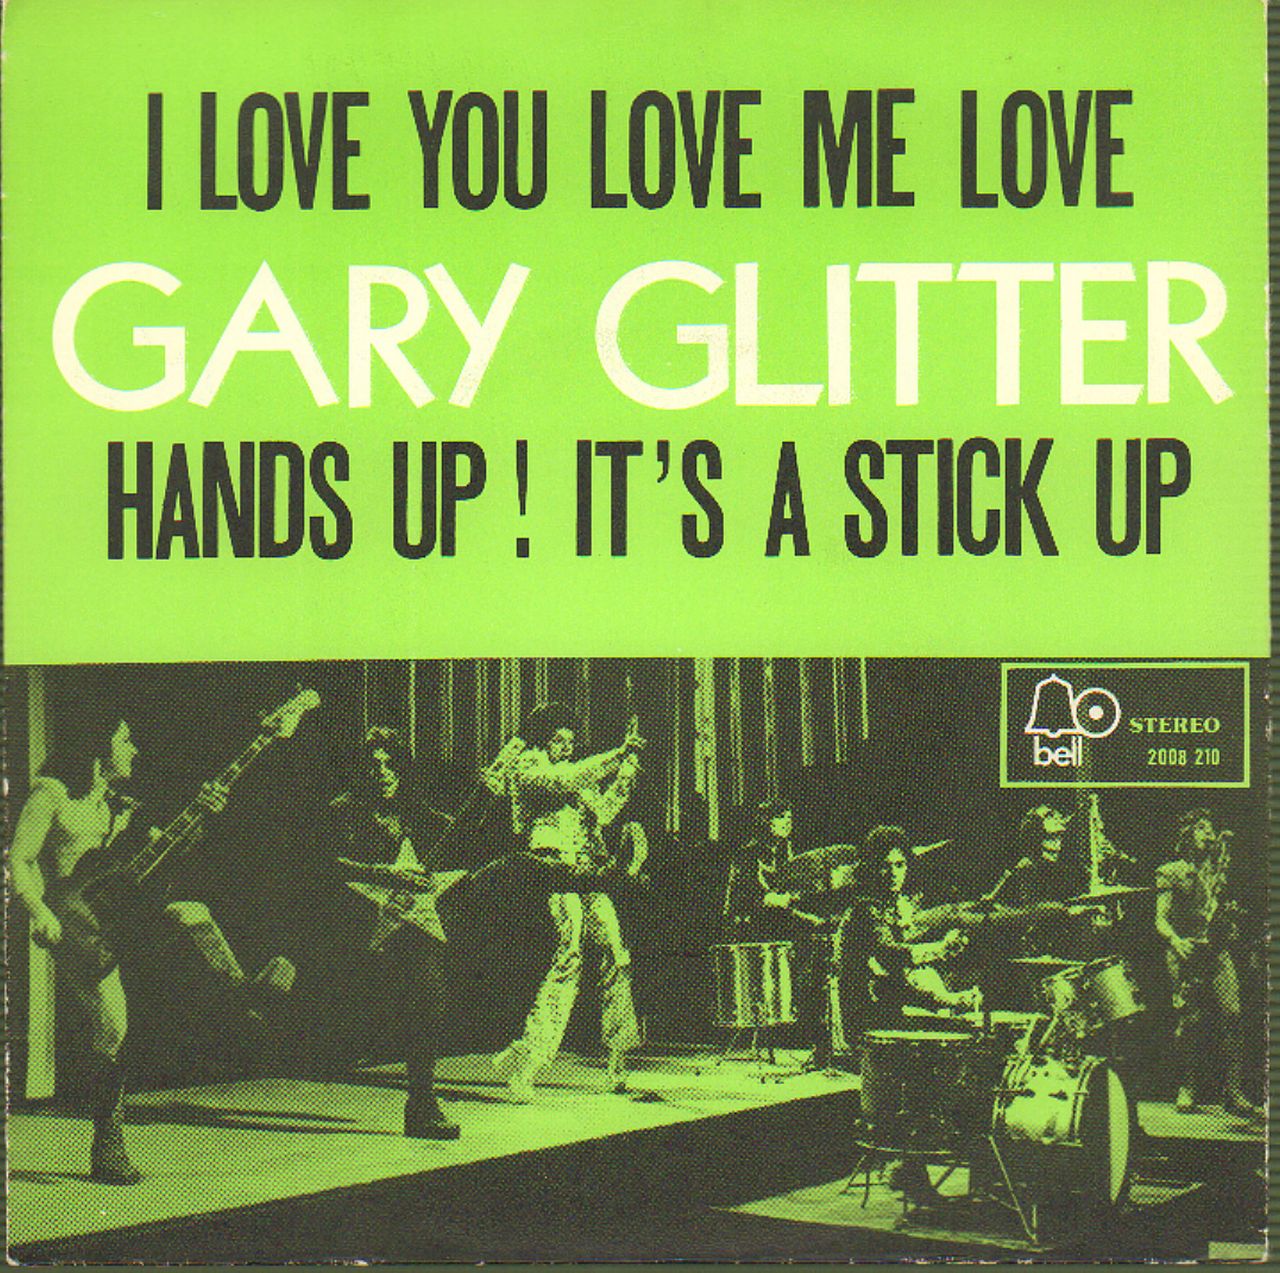 Glitter I You Love Belgian 7" vinyl — RareVinyl.com